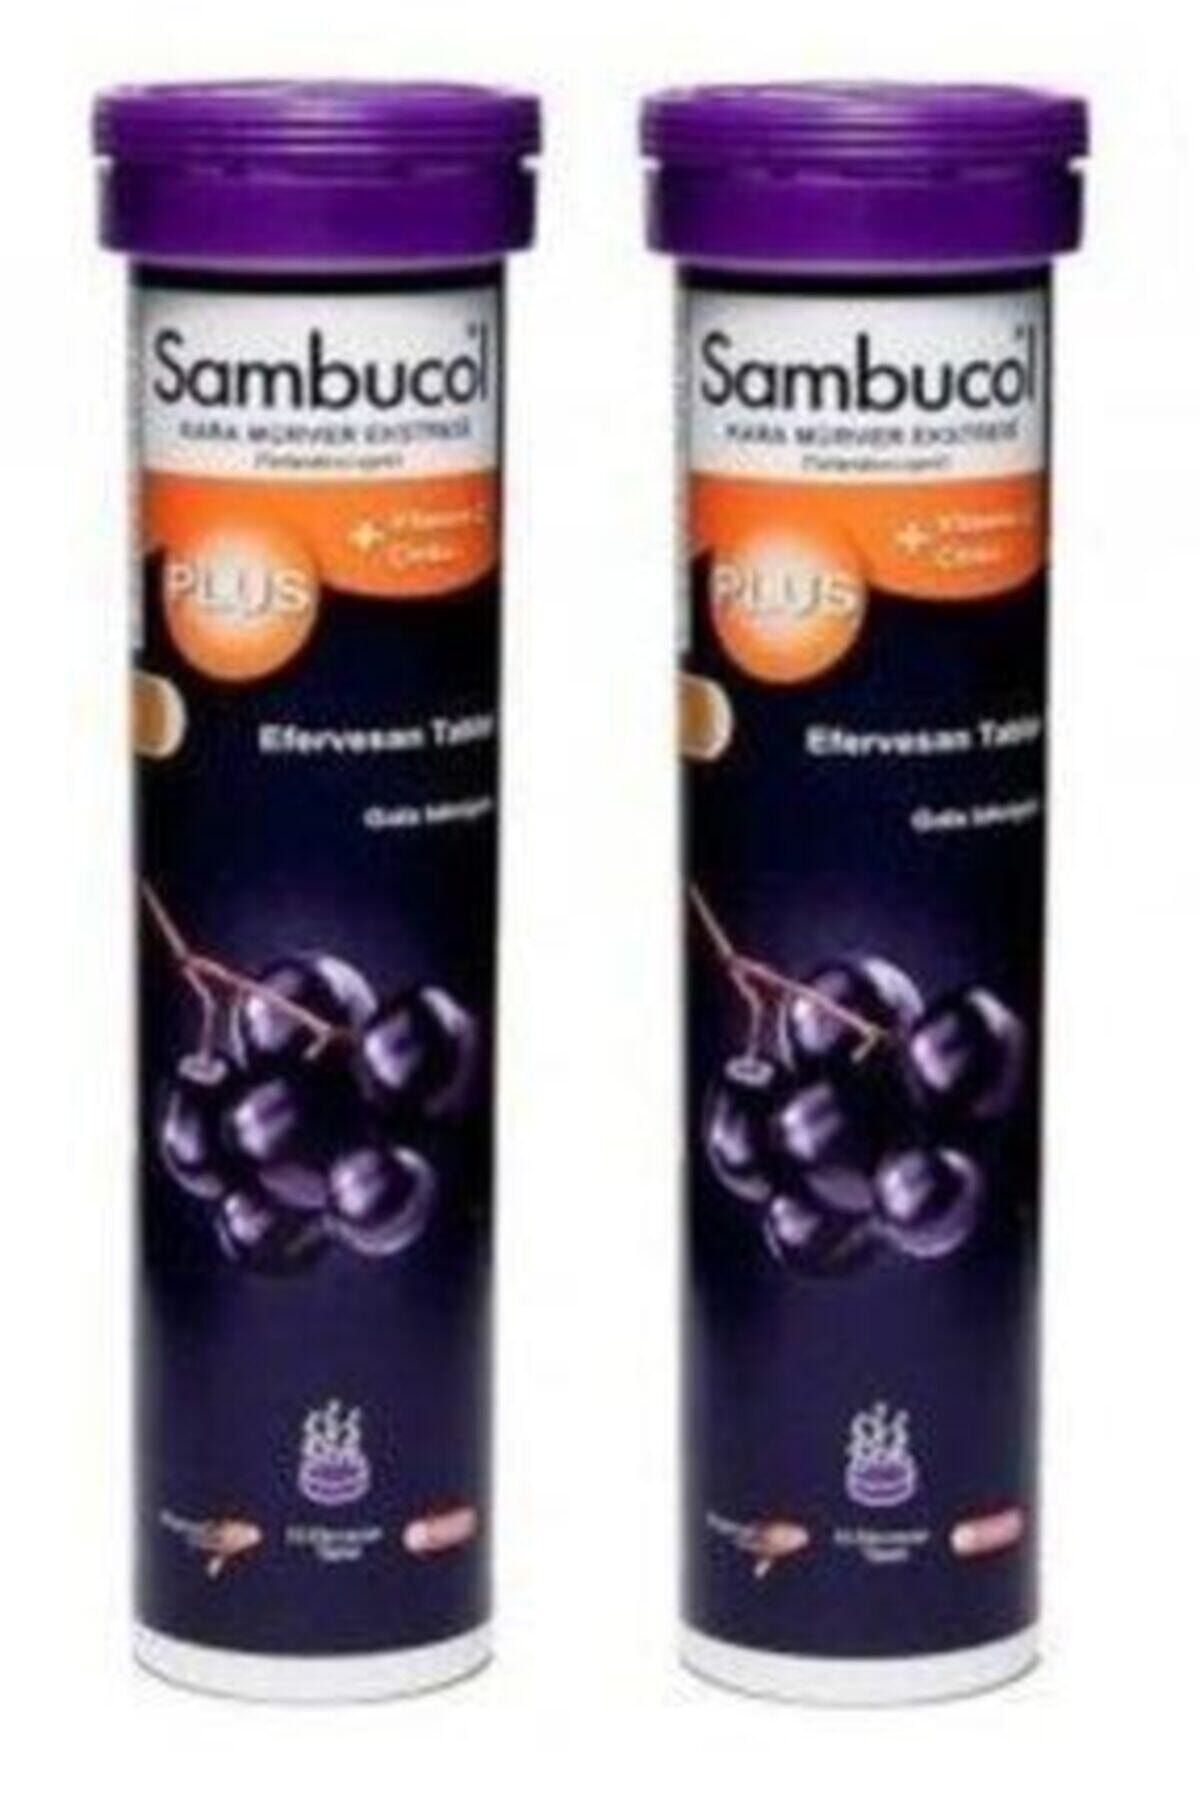 Sambucol Plus Kara Mürver + C Vitamini Çinko Takviye Edici Gıda 15 Tablet 2 Adet